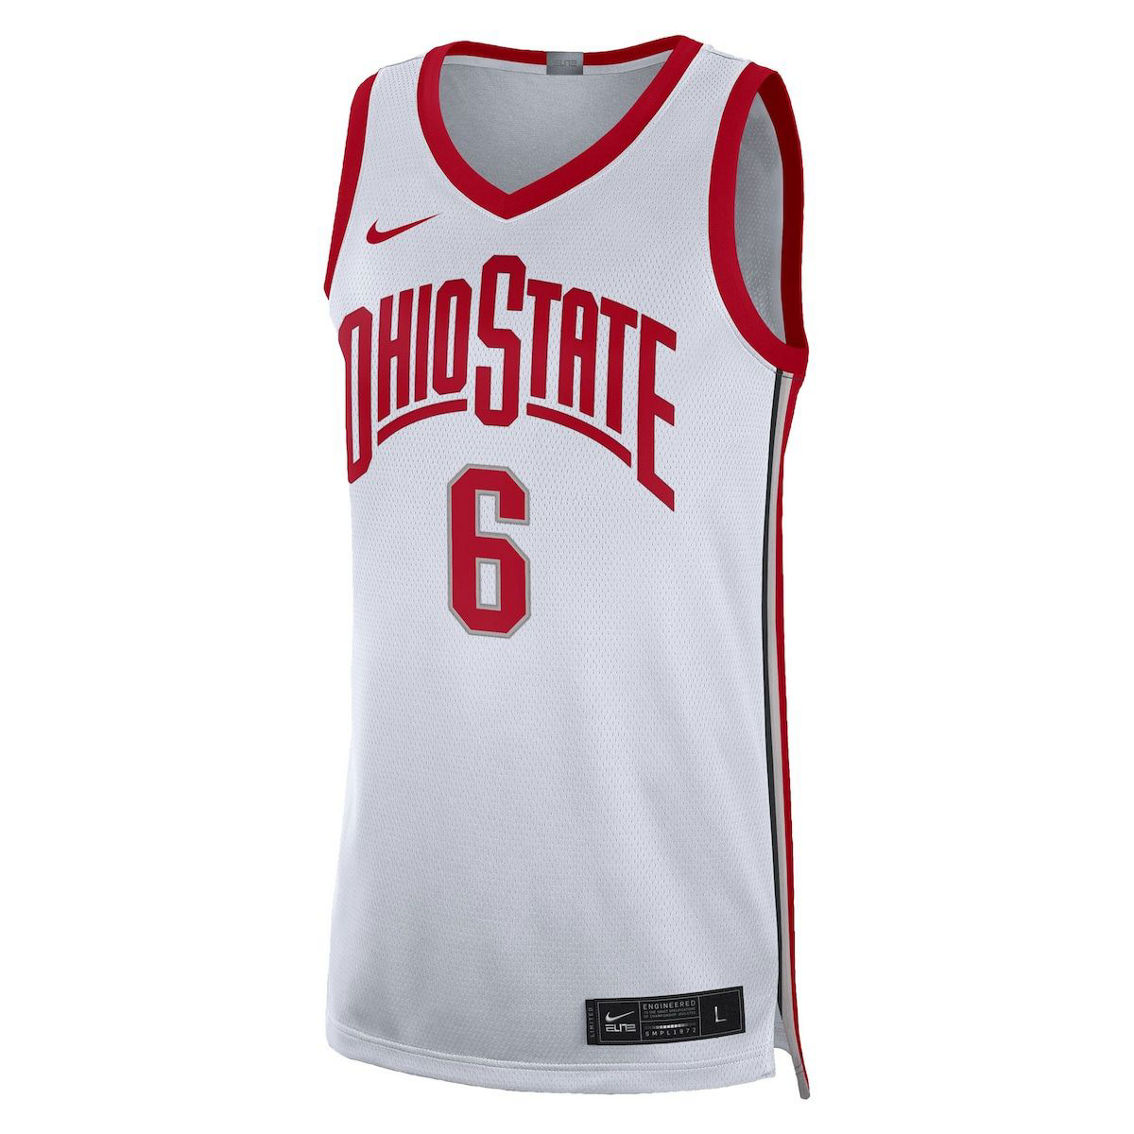 Nike Men's LeBron James White Ohio State Buckeyes Limited Basketball Jersey - Image 3 of 4